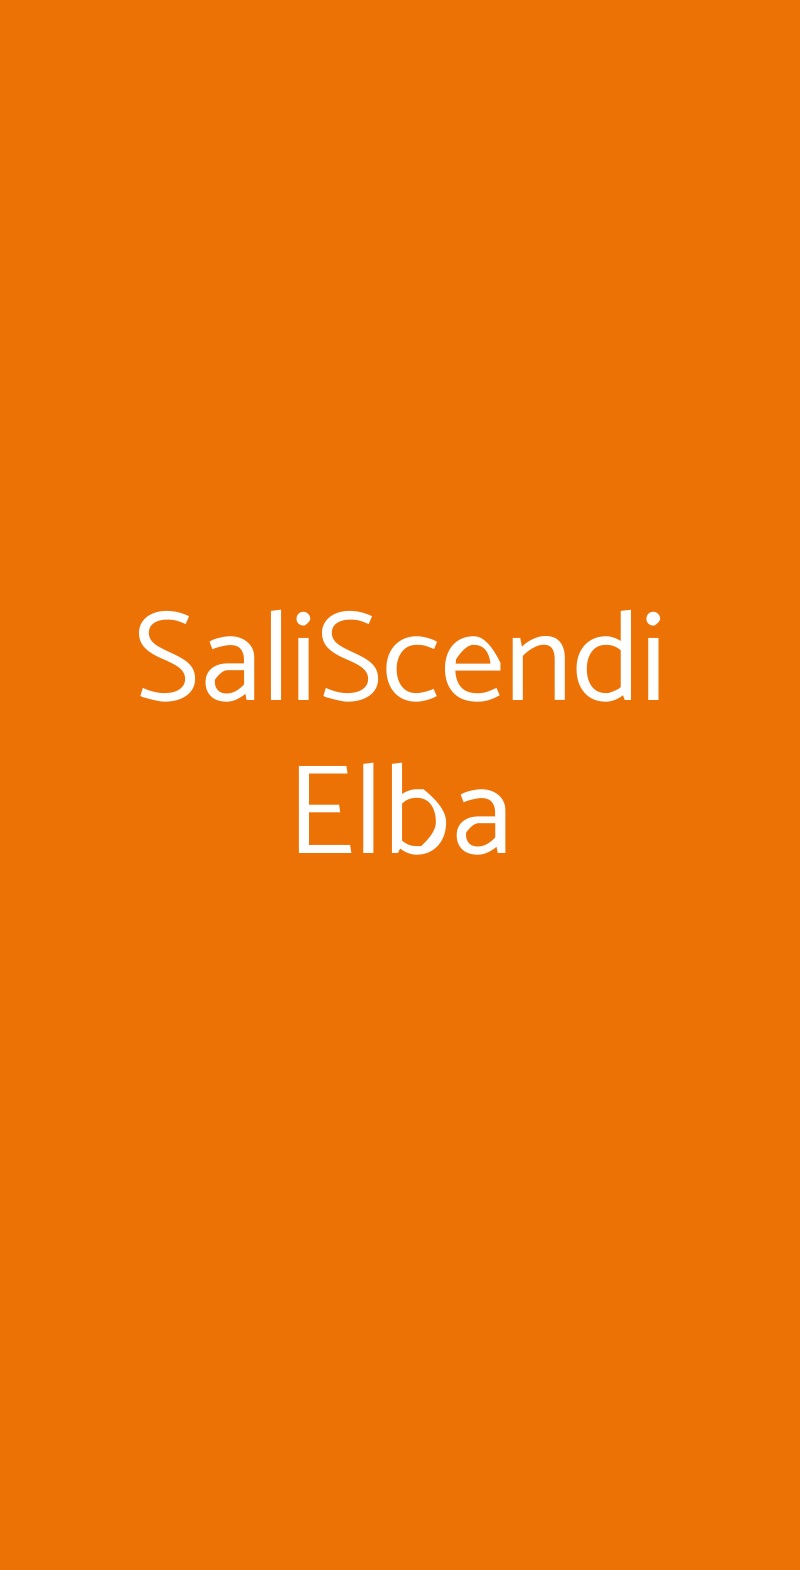 SaliScendi Elba Capoliveri menù 1 pagina